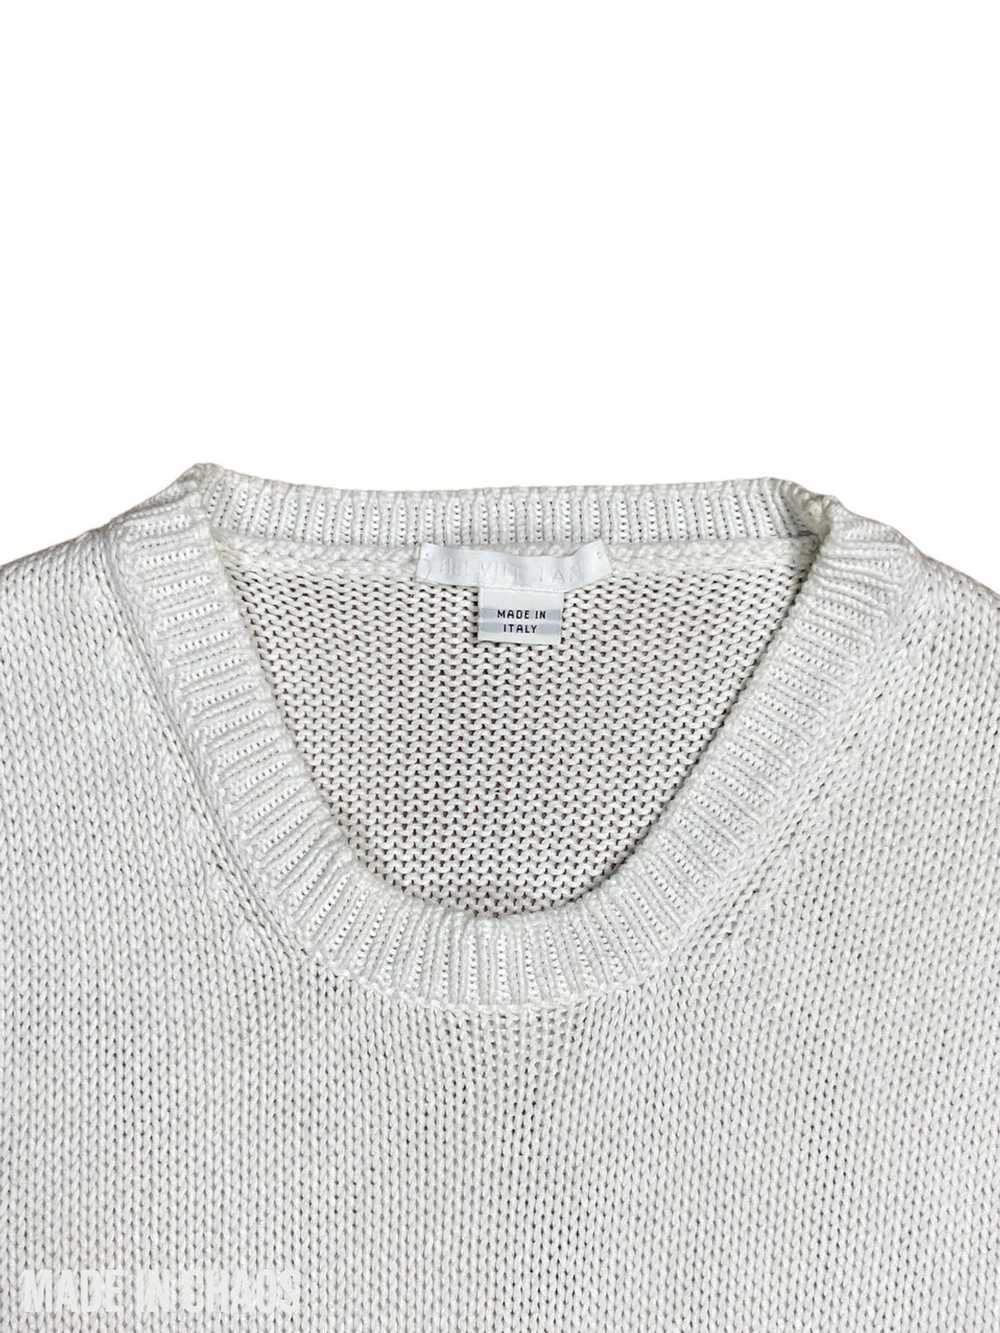 Helmut Lang Helmut Lang 90’s Sleeveless Knitwear - image 7